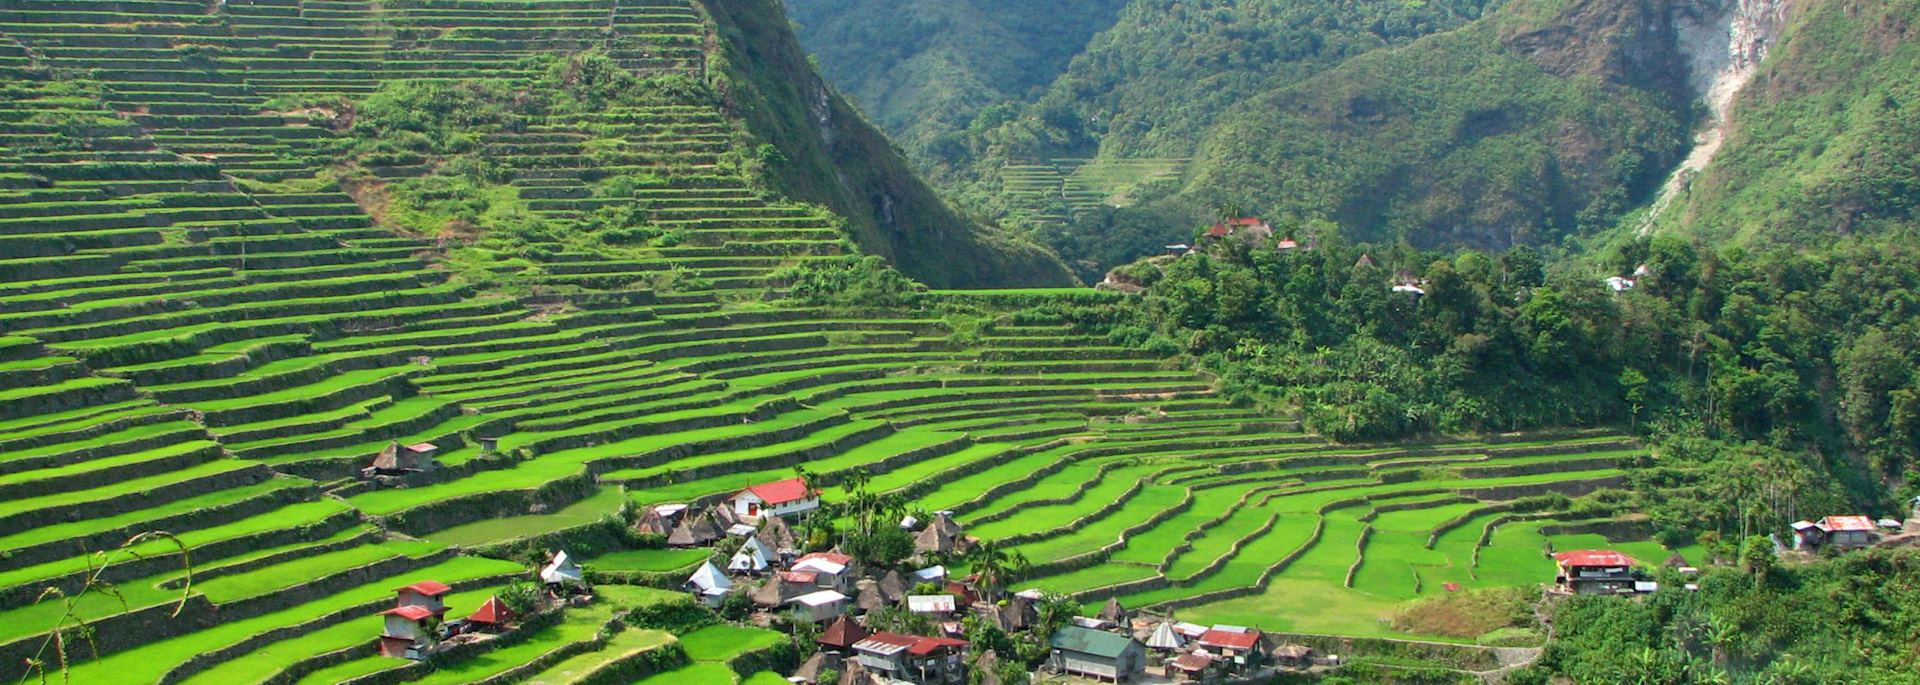 Batad rice terraces, the Philippines